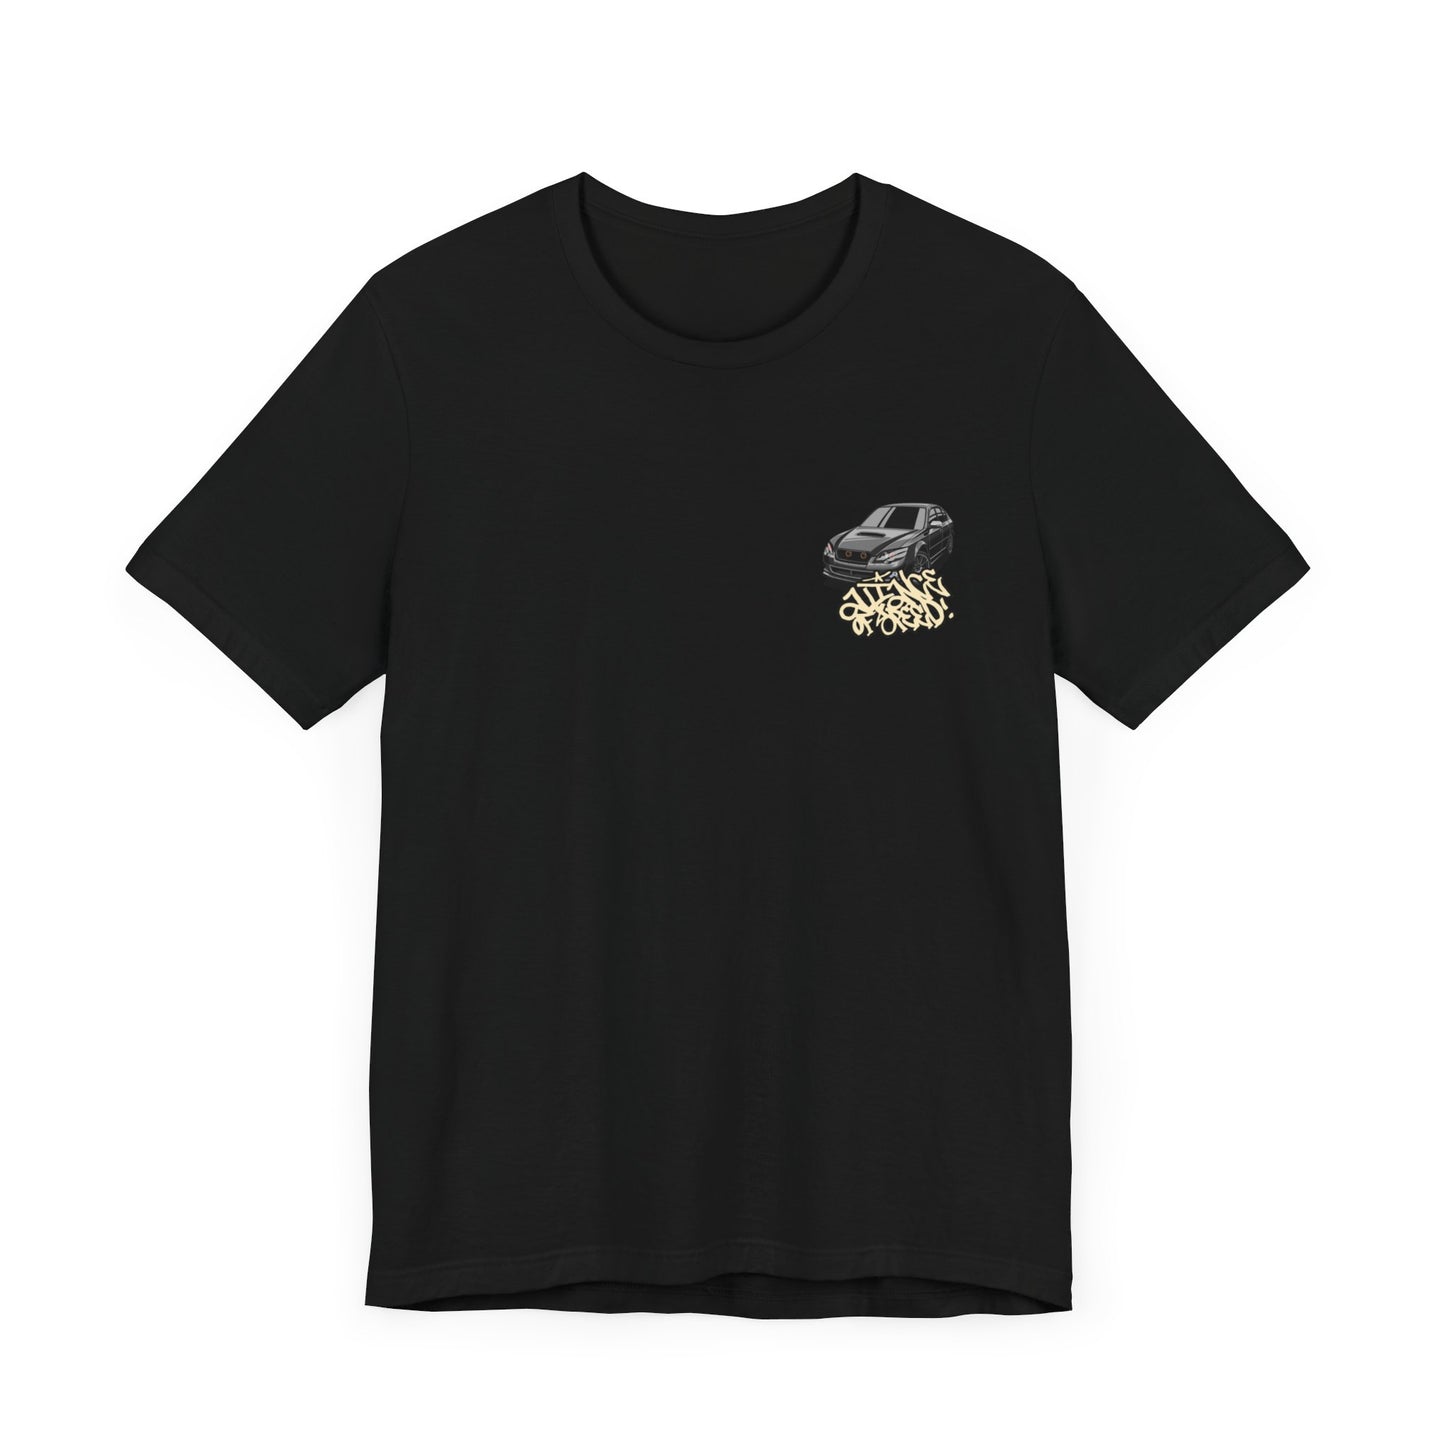 AOS Ants' Legacy GT T-Shirt